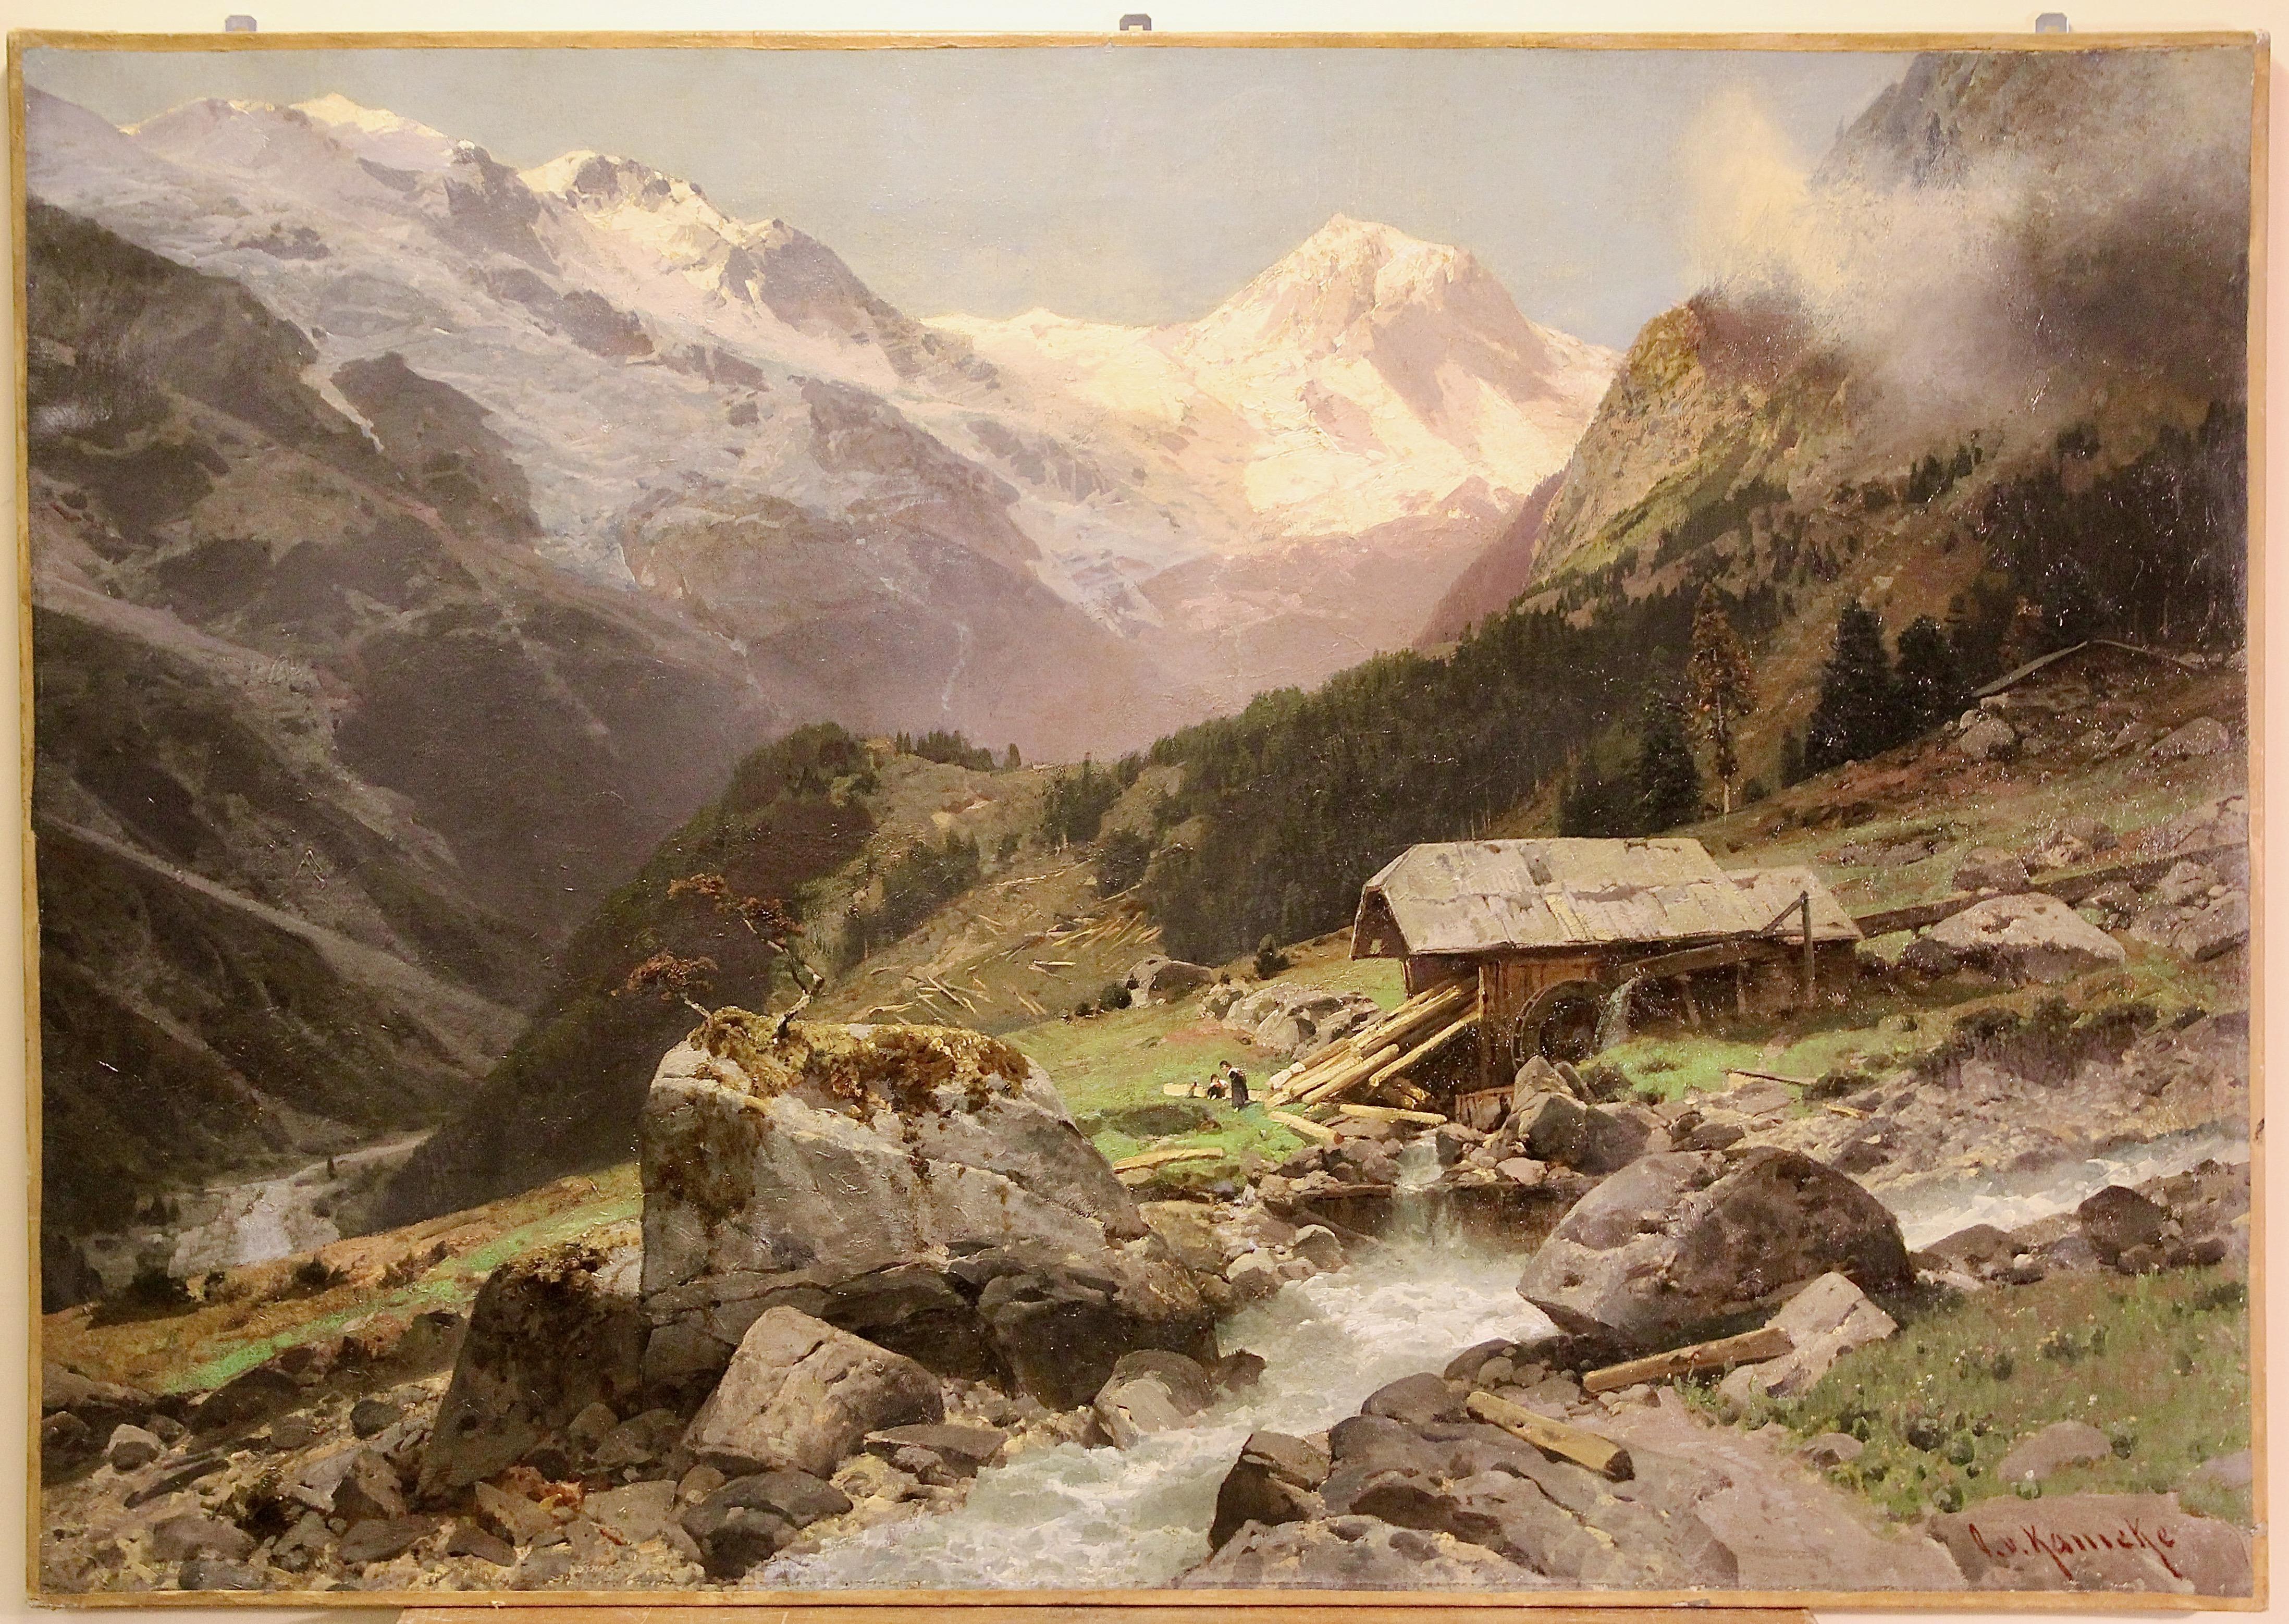 Paysage de haute montagne, Alpes. Peinture à l'huile d'Otto Werner Henning von Kameke. - Painting de Otto von Kameke